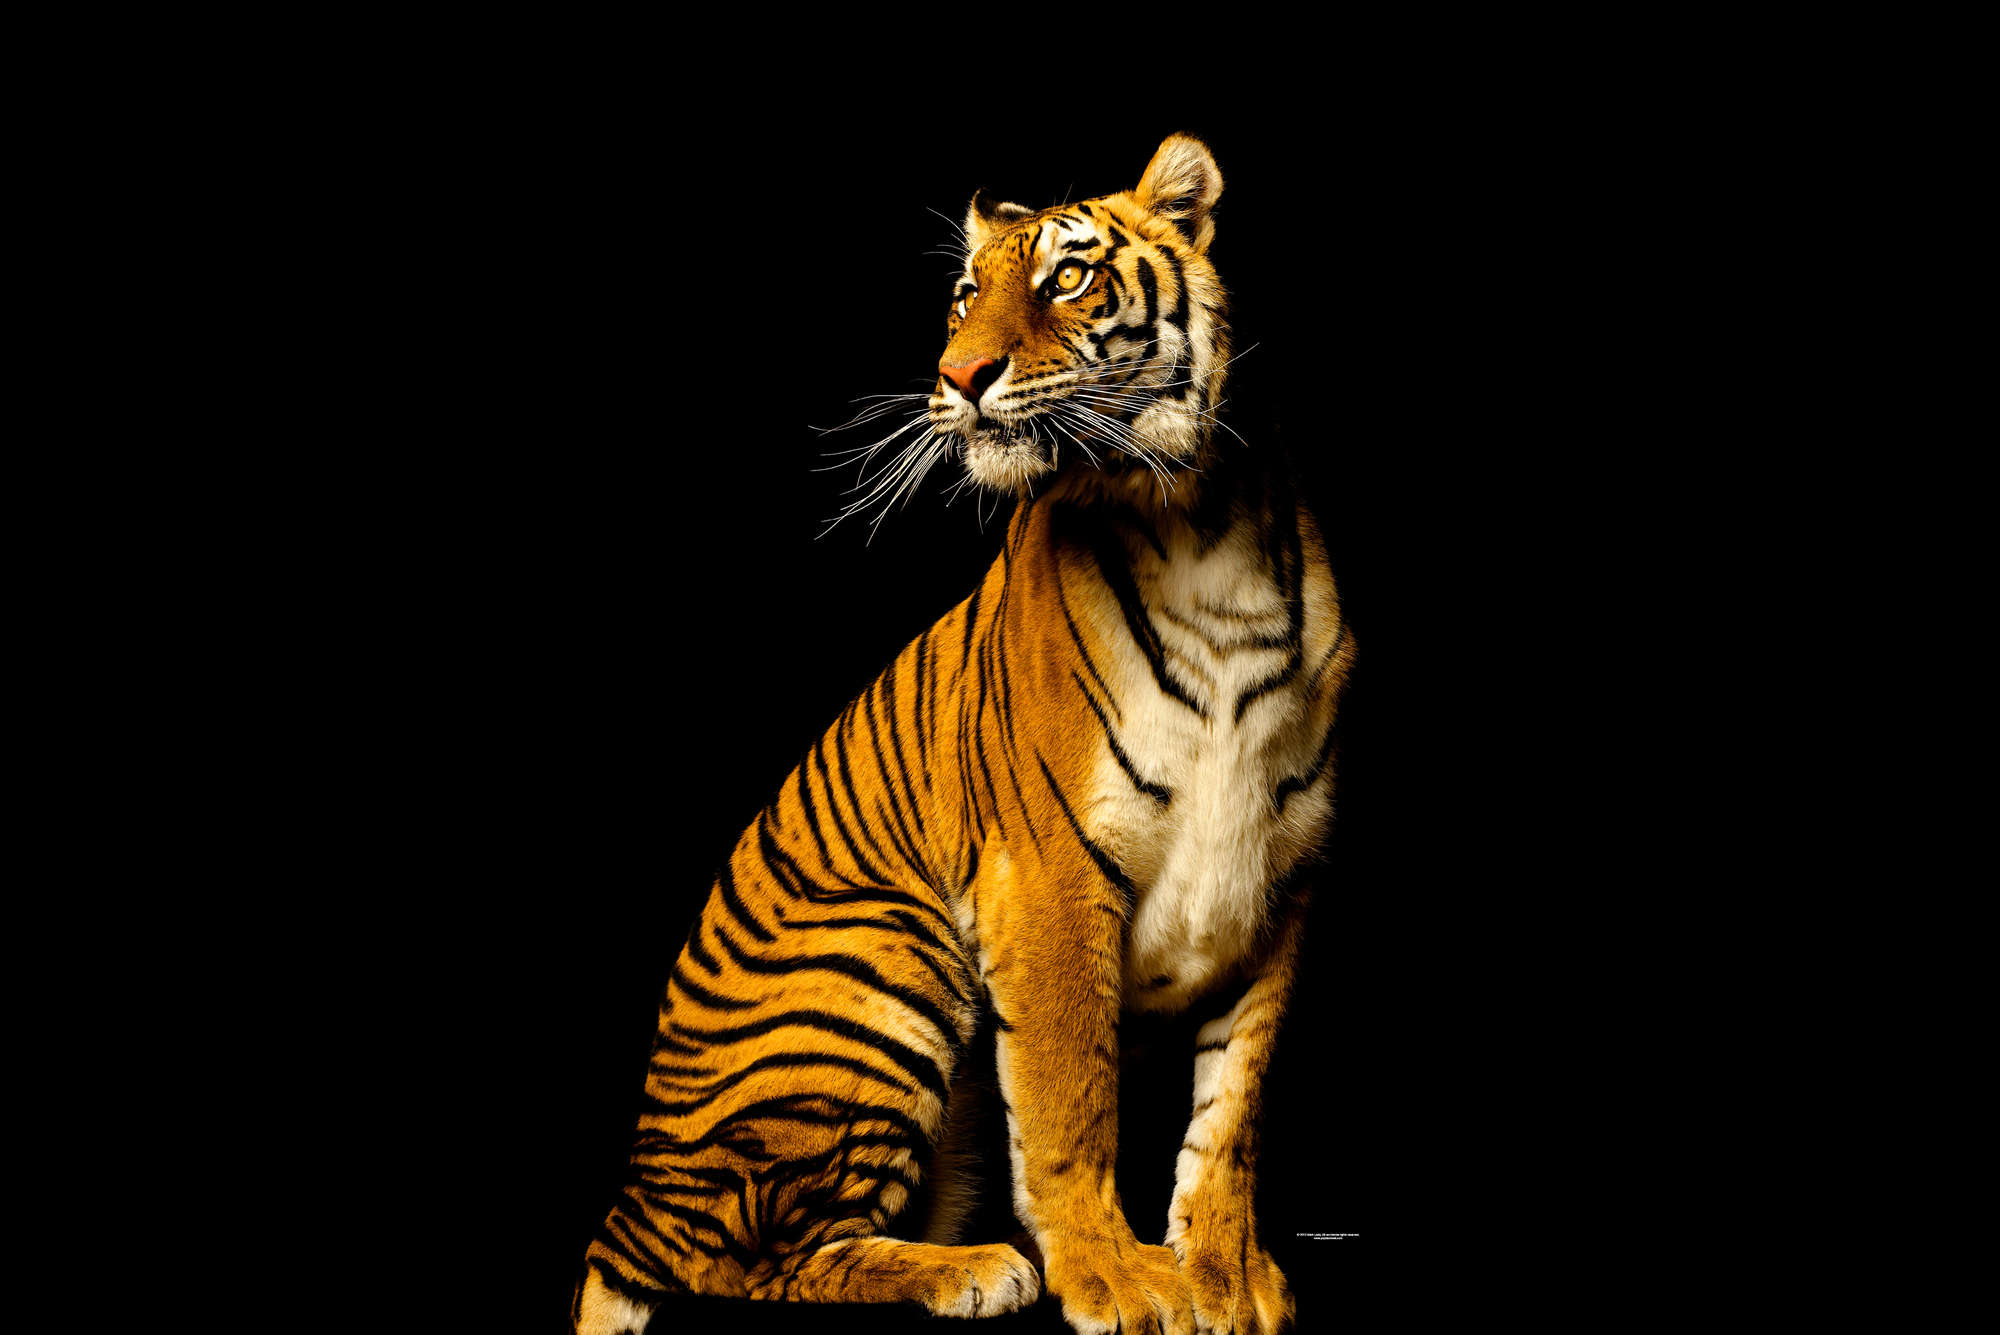             Tiger photo wallpaper against black background on premium smooth fleece
        